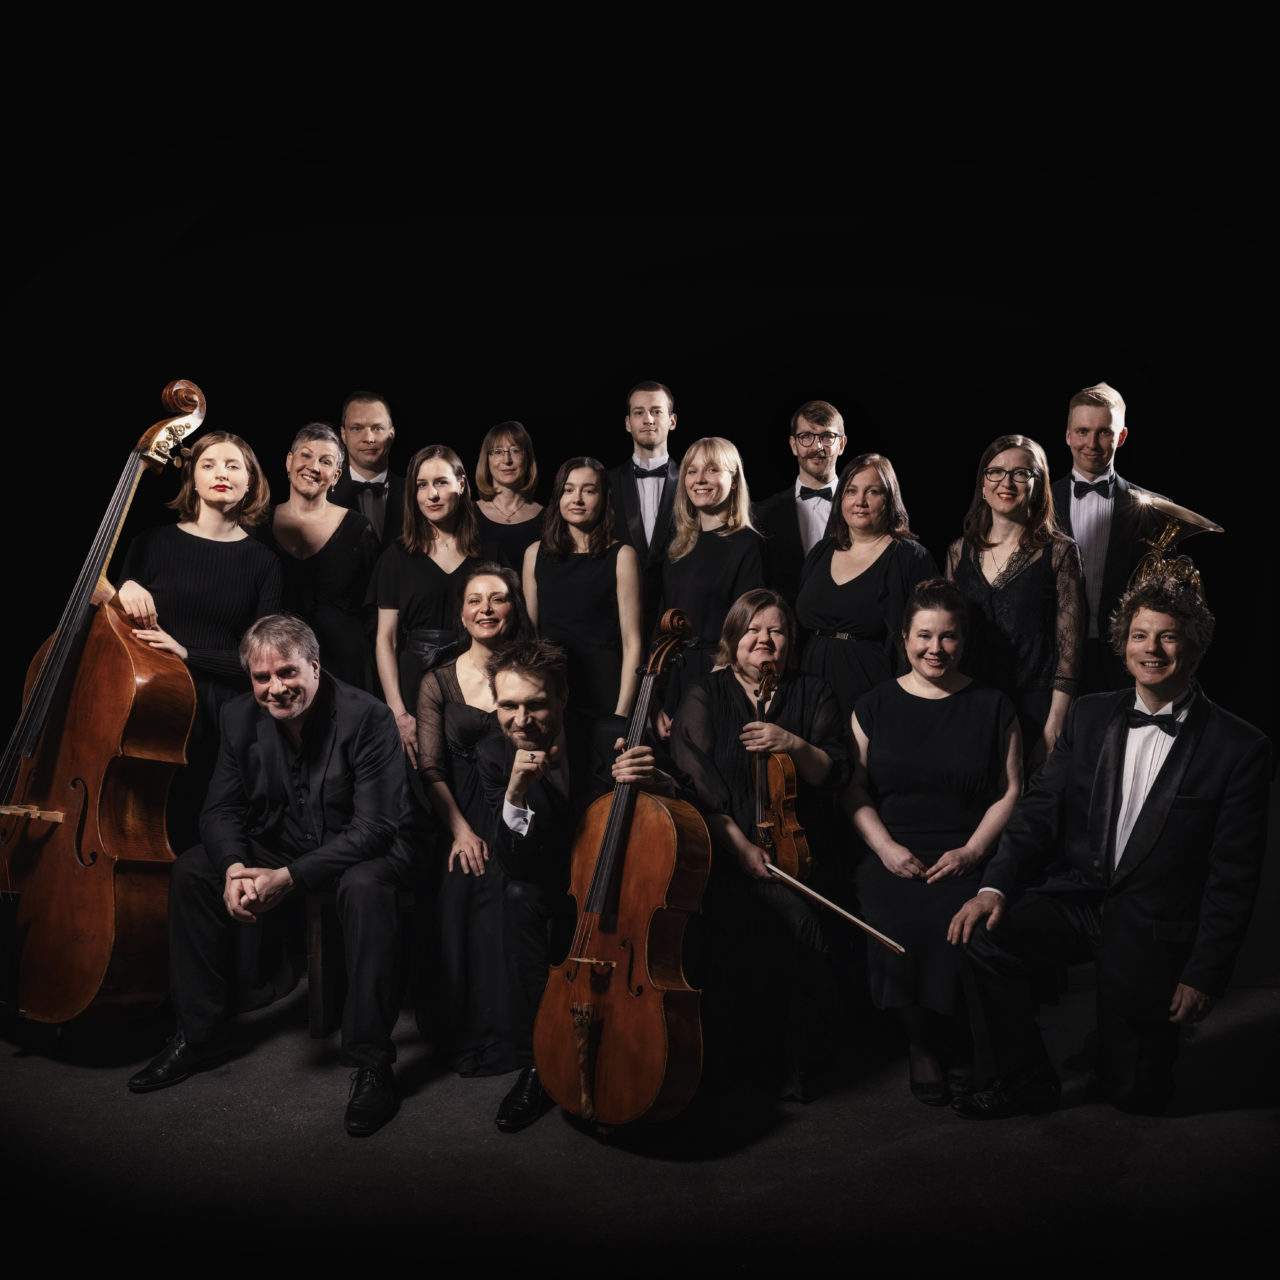 Chamber symphony concert V 'Cavalcade of Finland’s finest' at Salla church